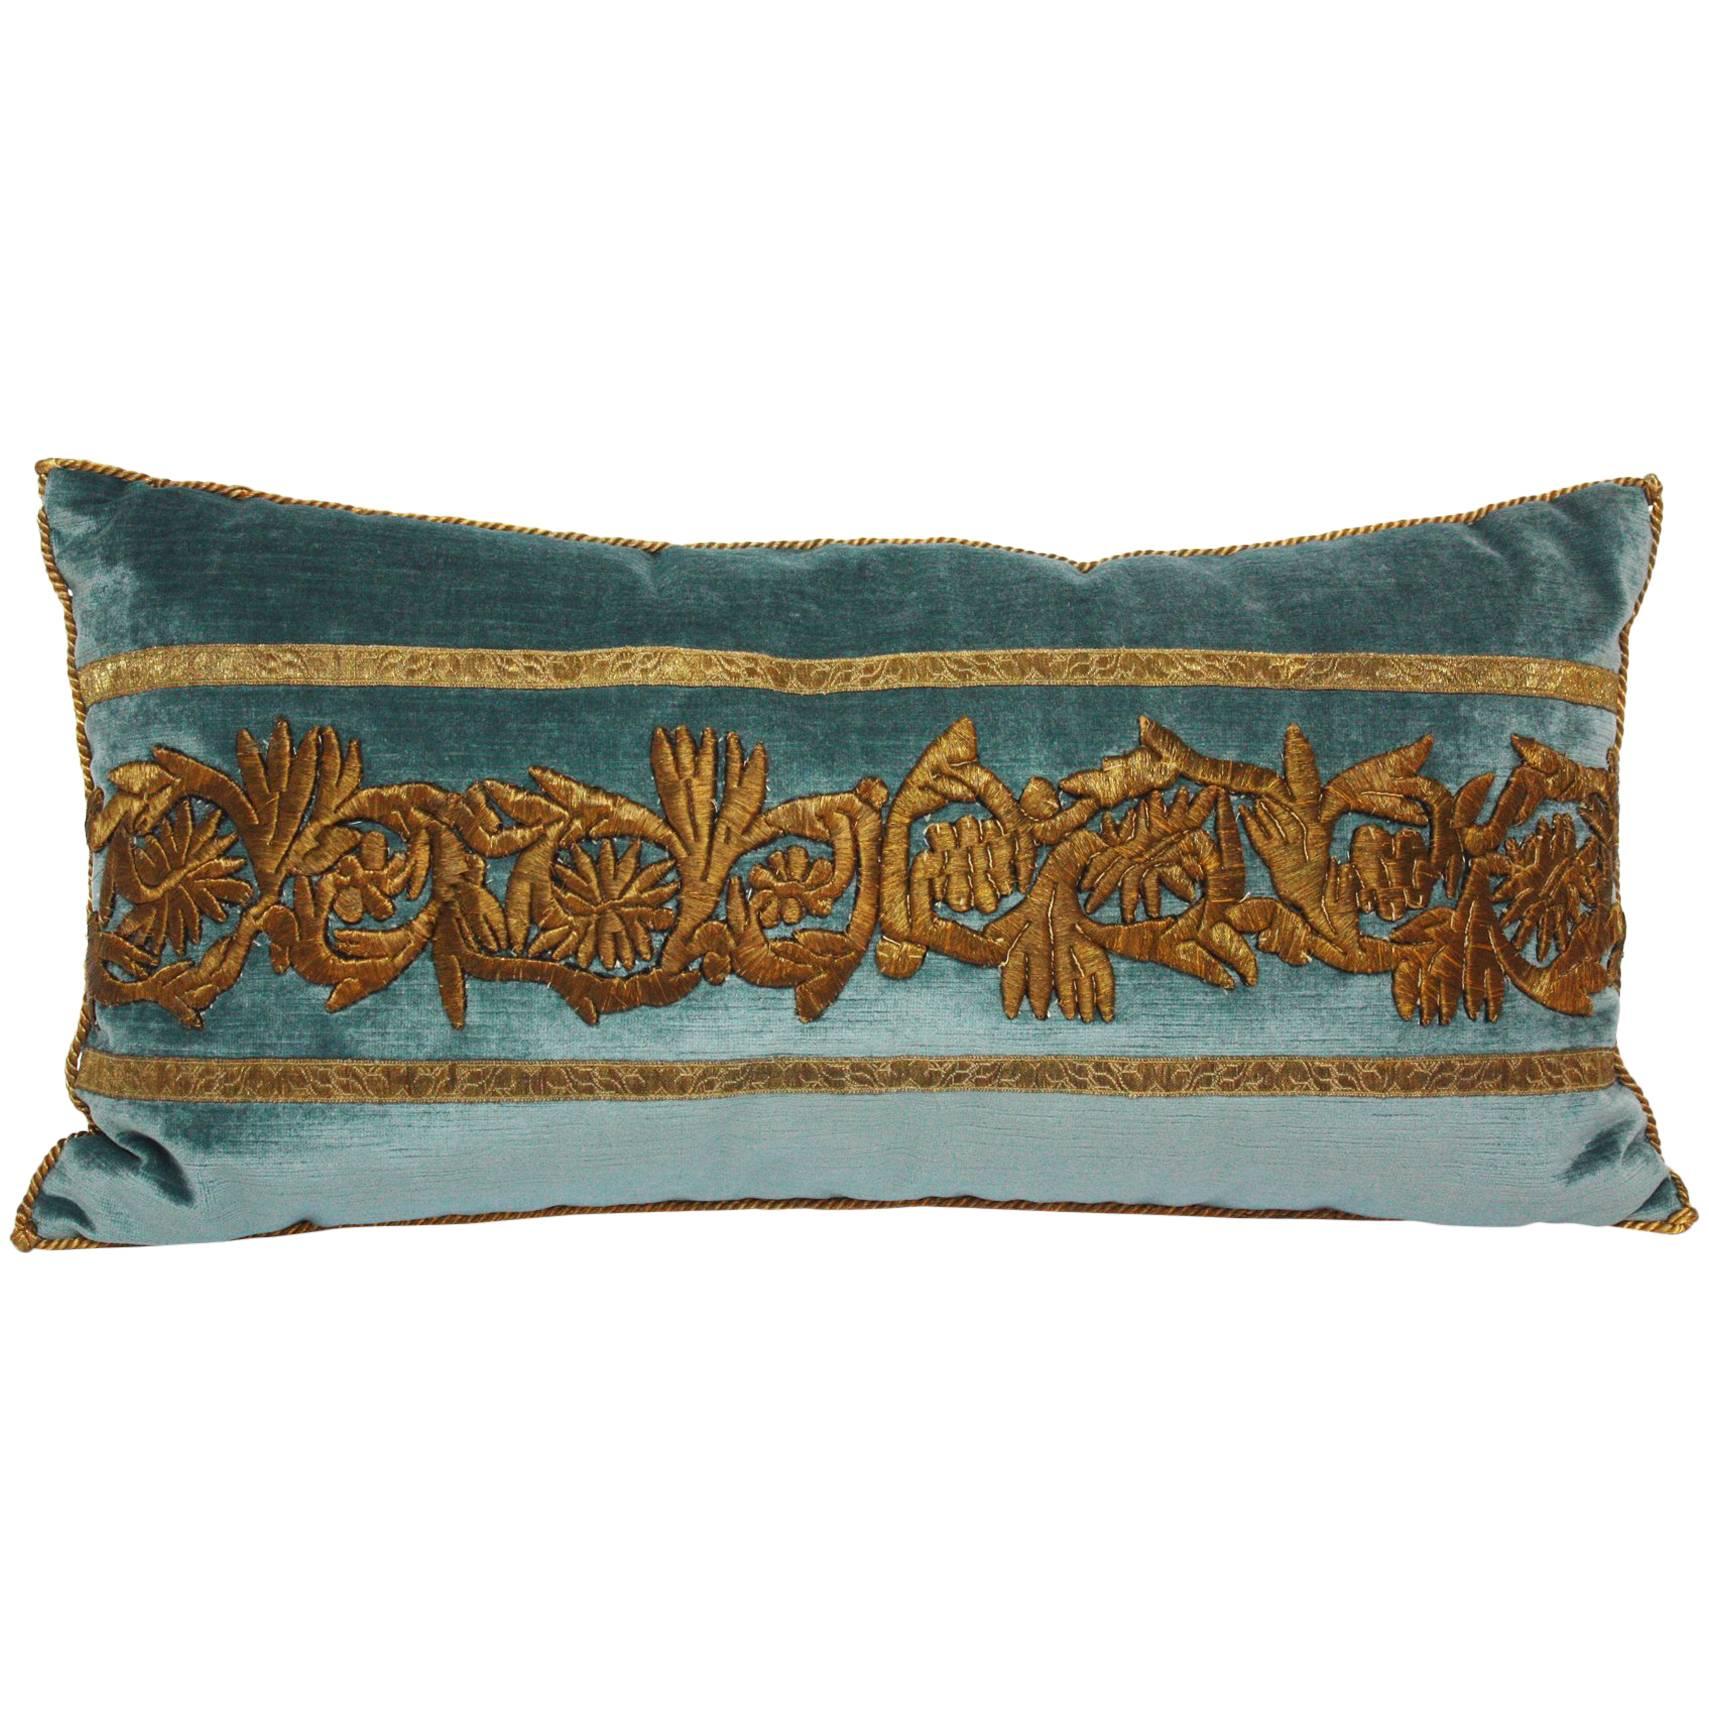 Antique Textile Pillow by Rebecca Vizard of B. VIZ Design 